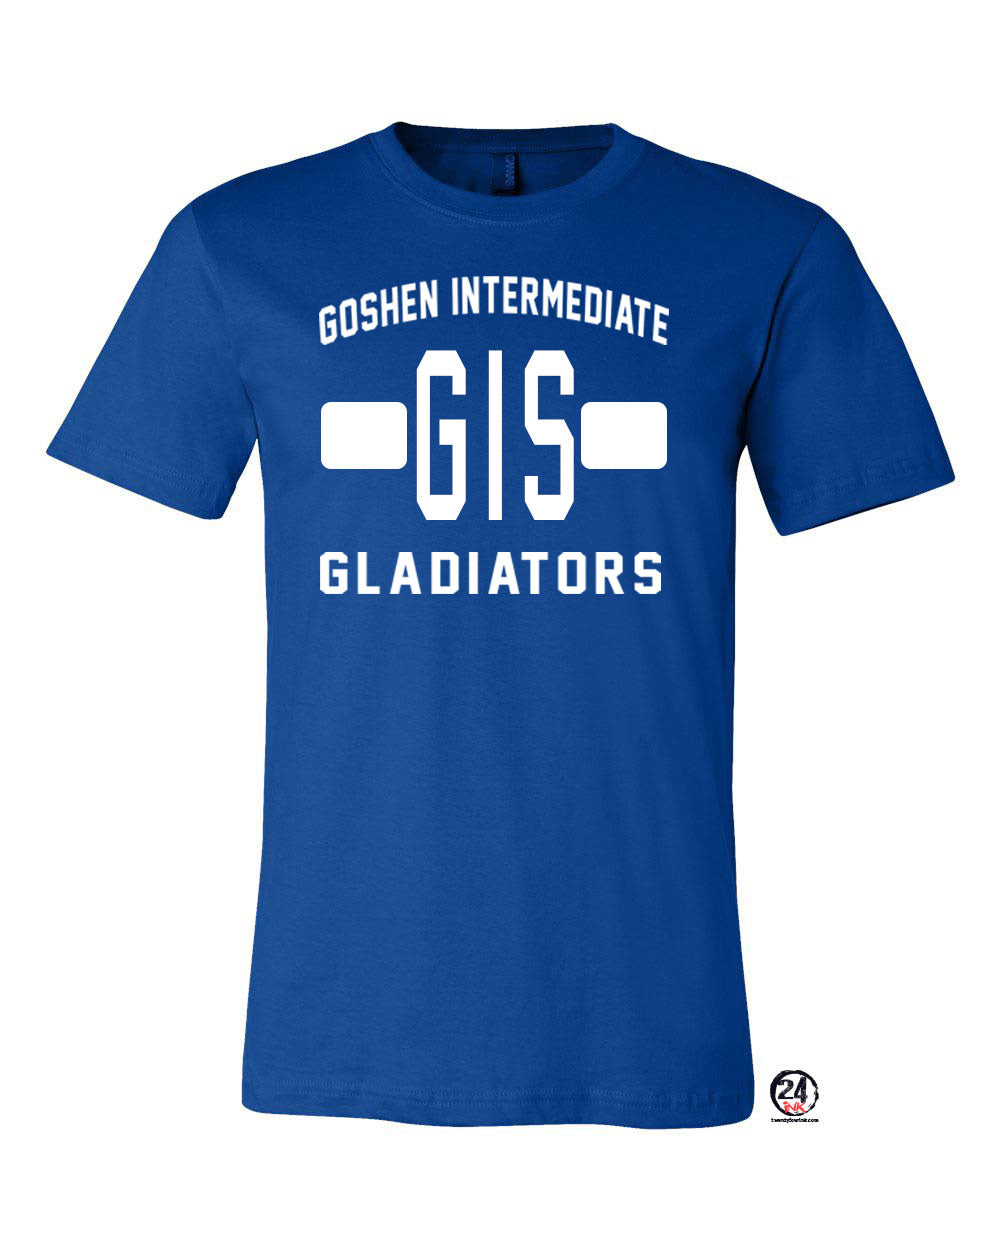 Goshen School Design 6 t-Shirt